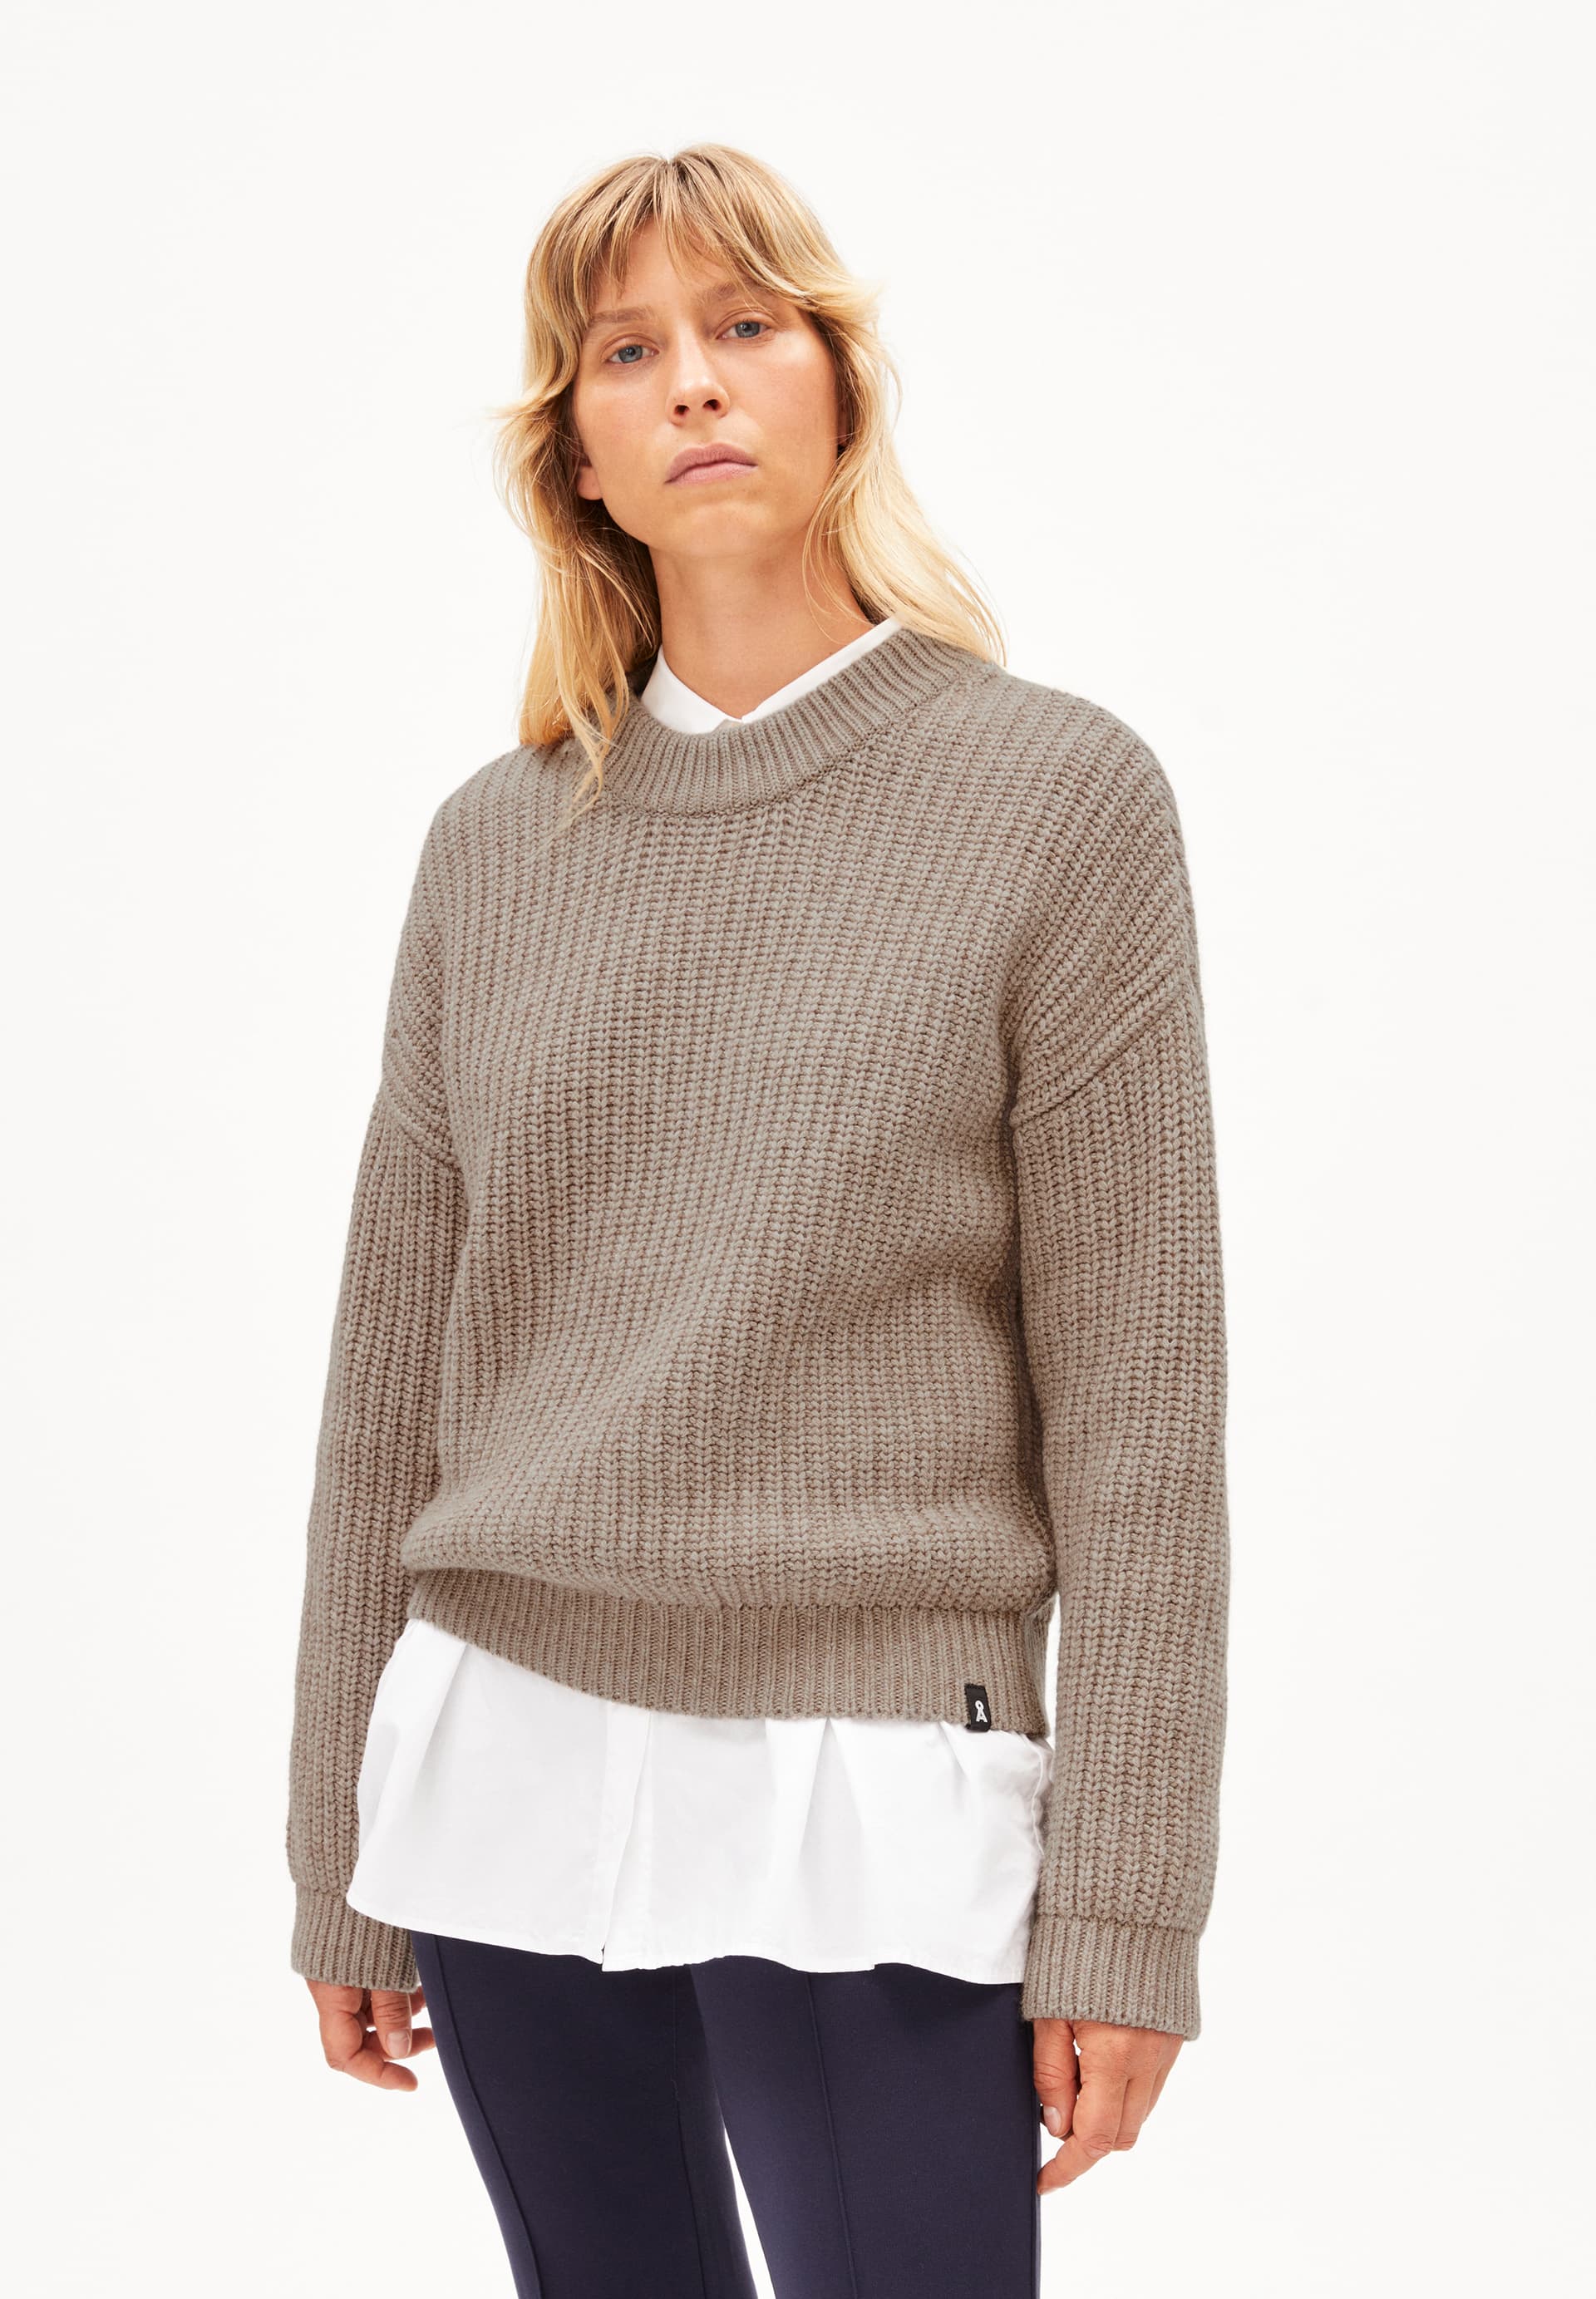 MIYAAR SOLID Sweater made of Organic Wool Mix